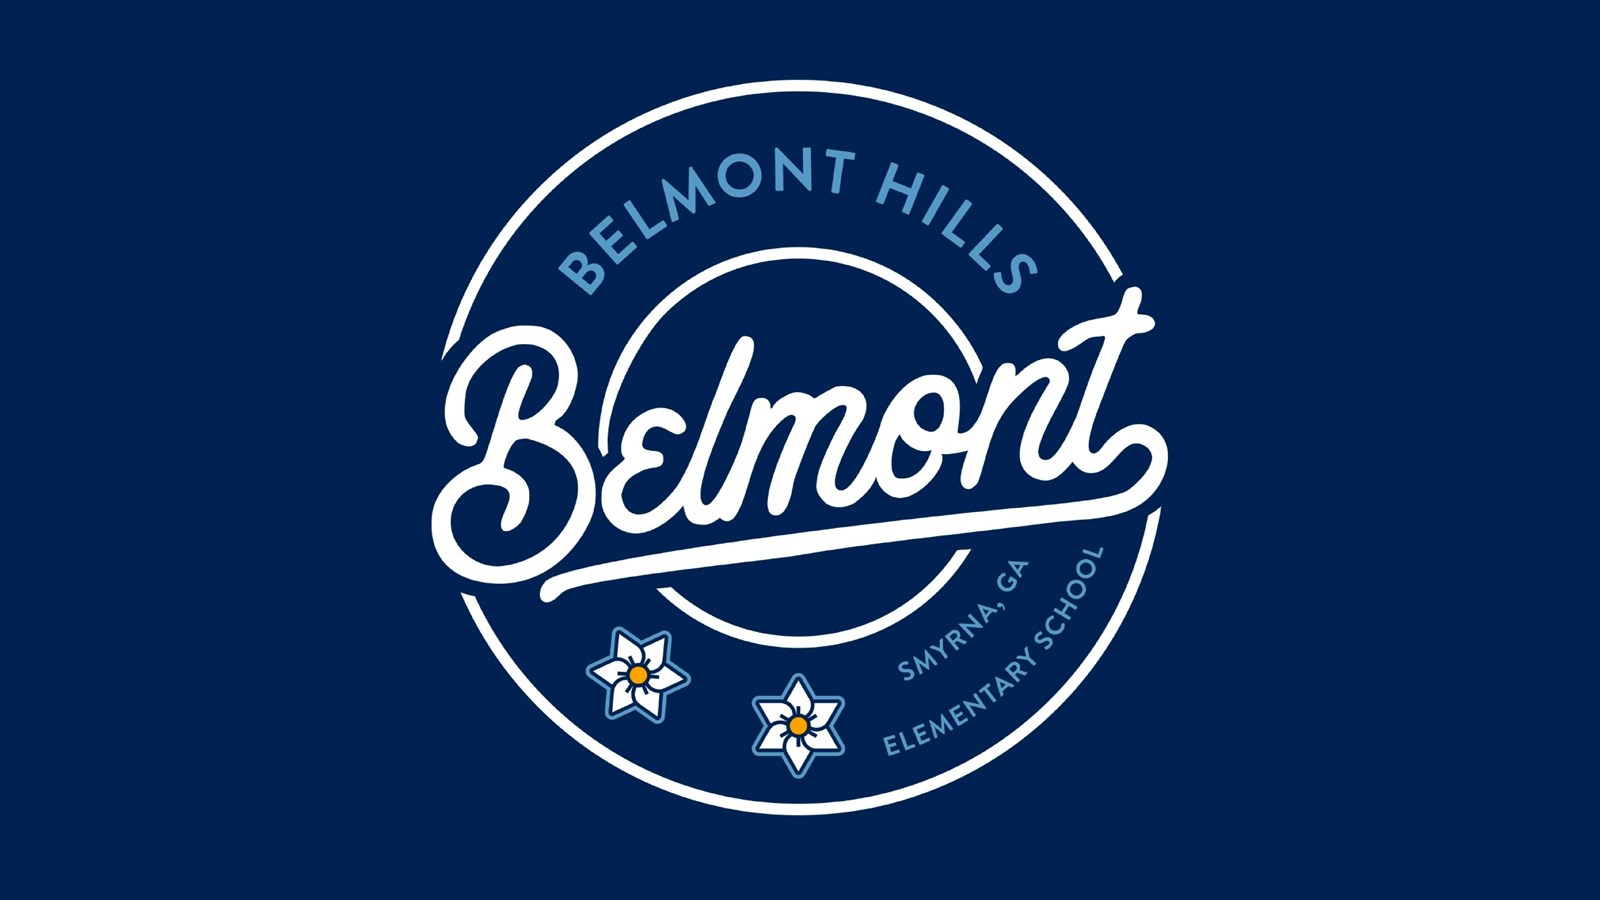 Belmont Hills